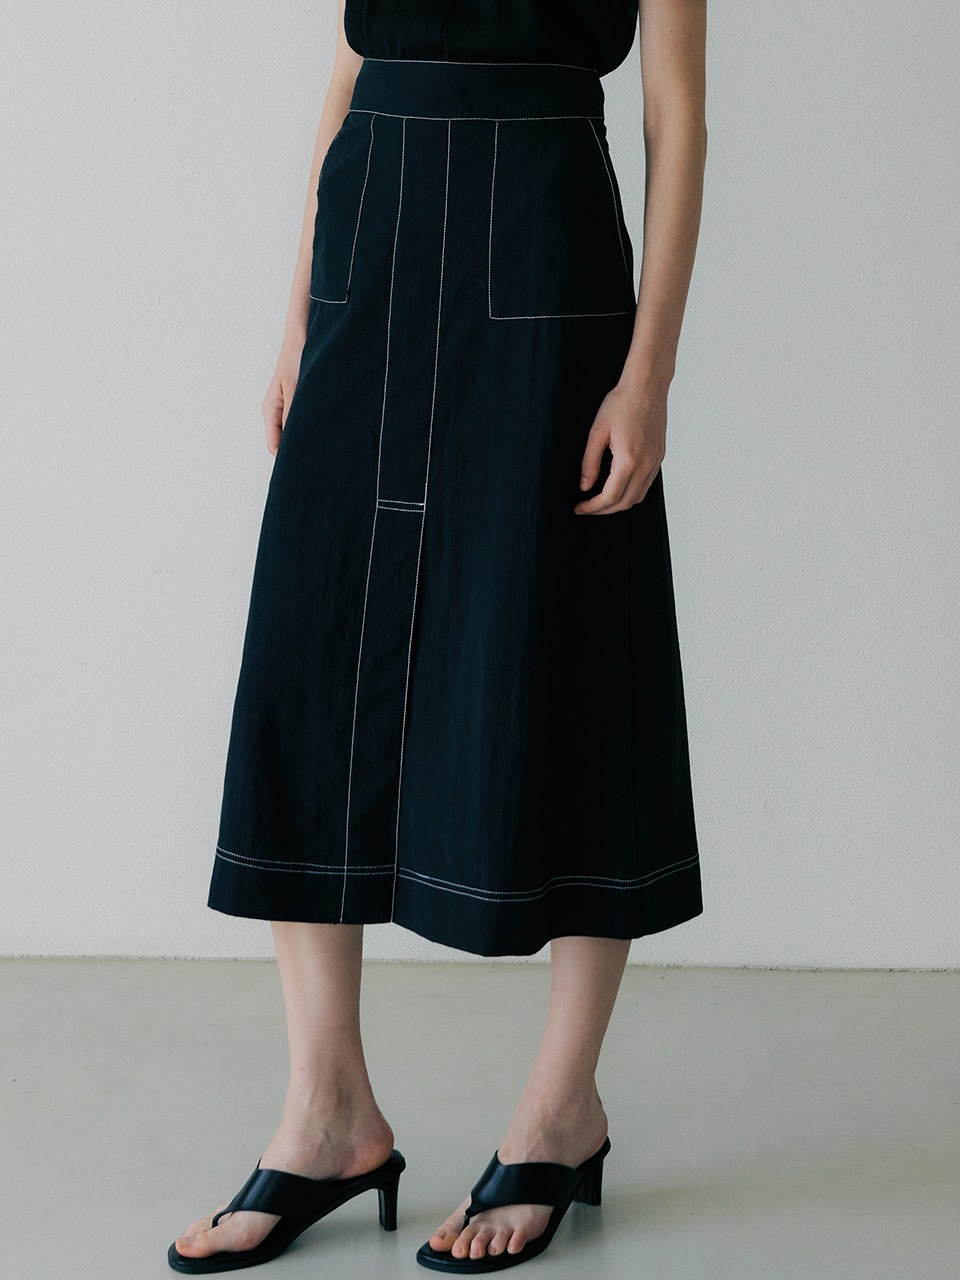 comos 869 stitch point skirt (black)